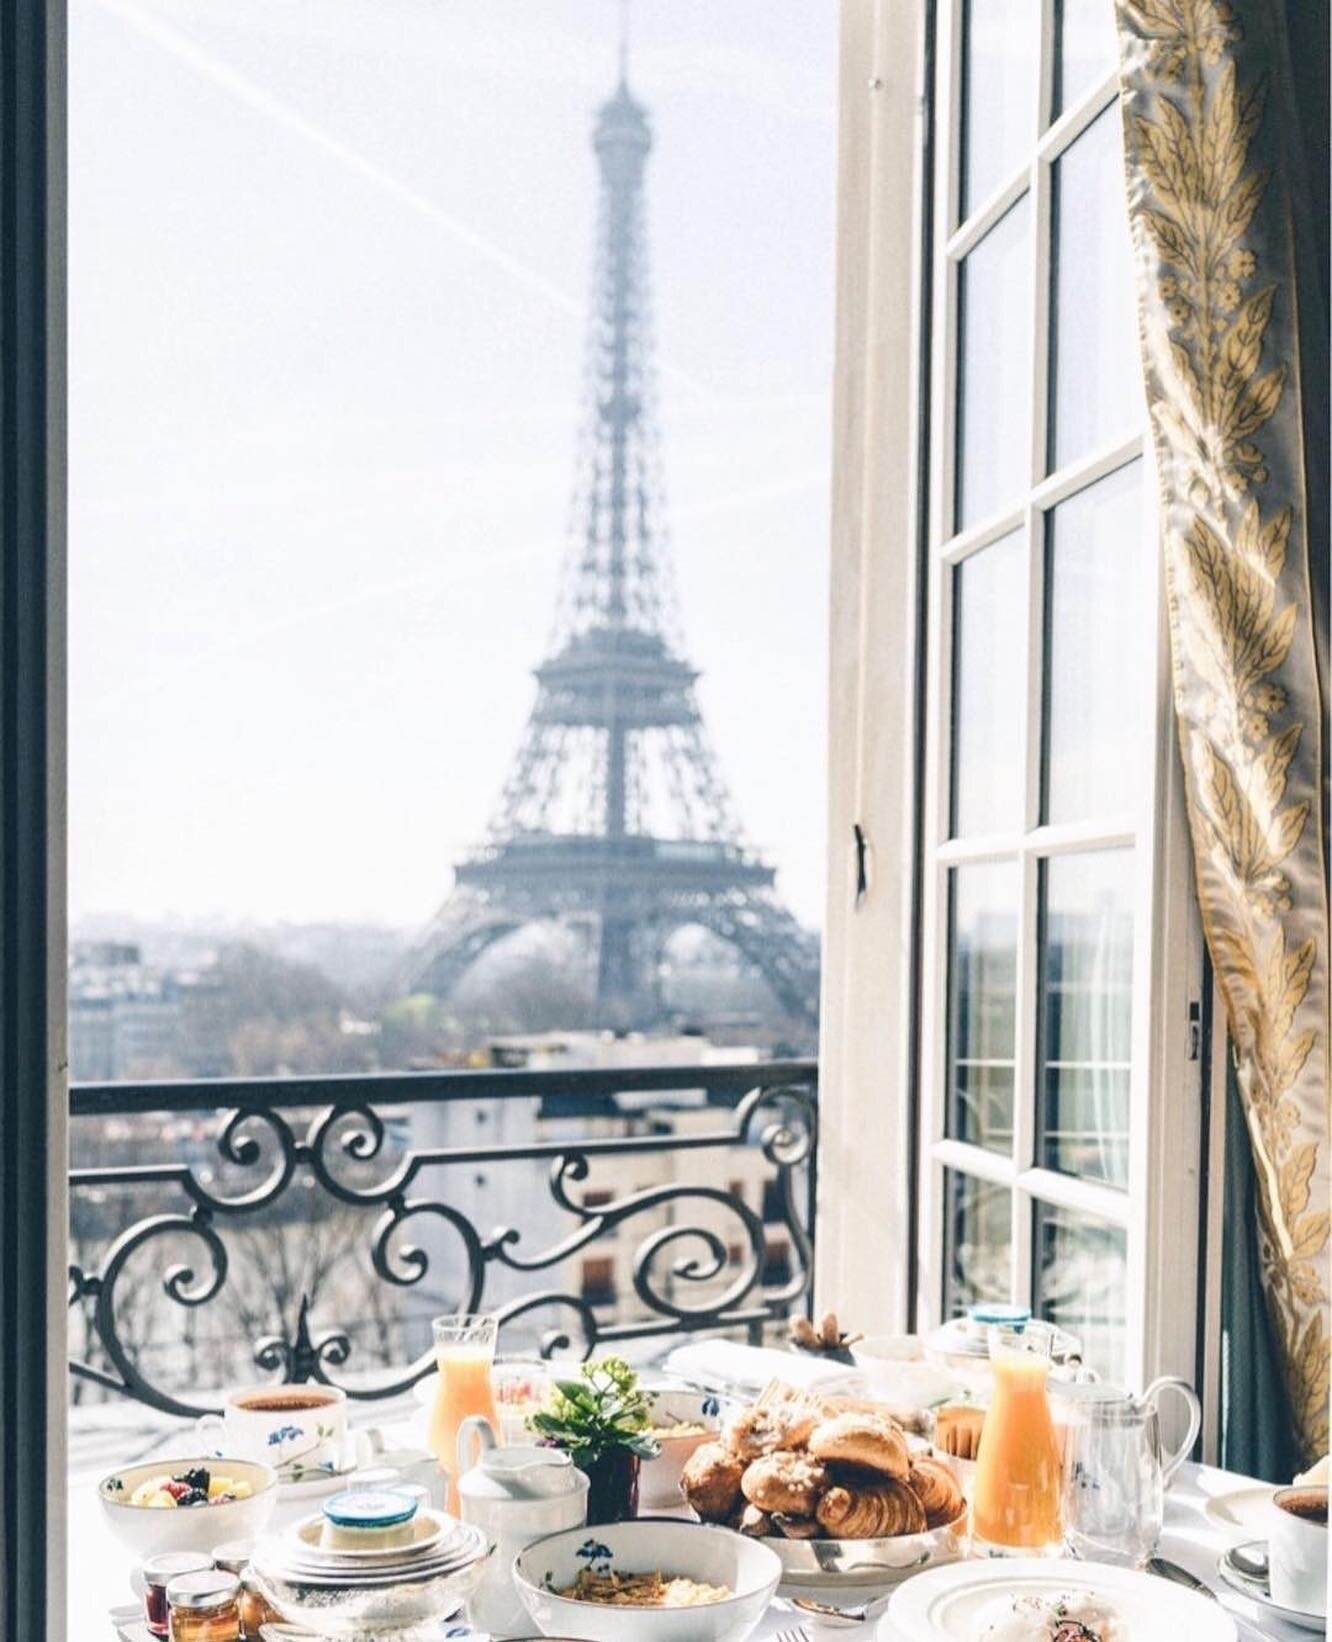 Paris Was Made for Love❤️🥐
Shangri-La, Paris 
📸lichipan